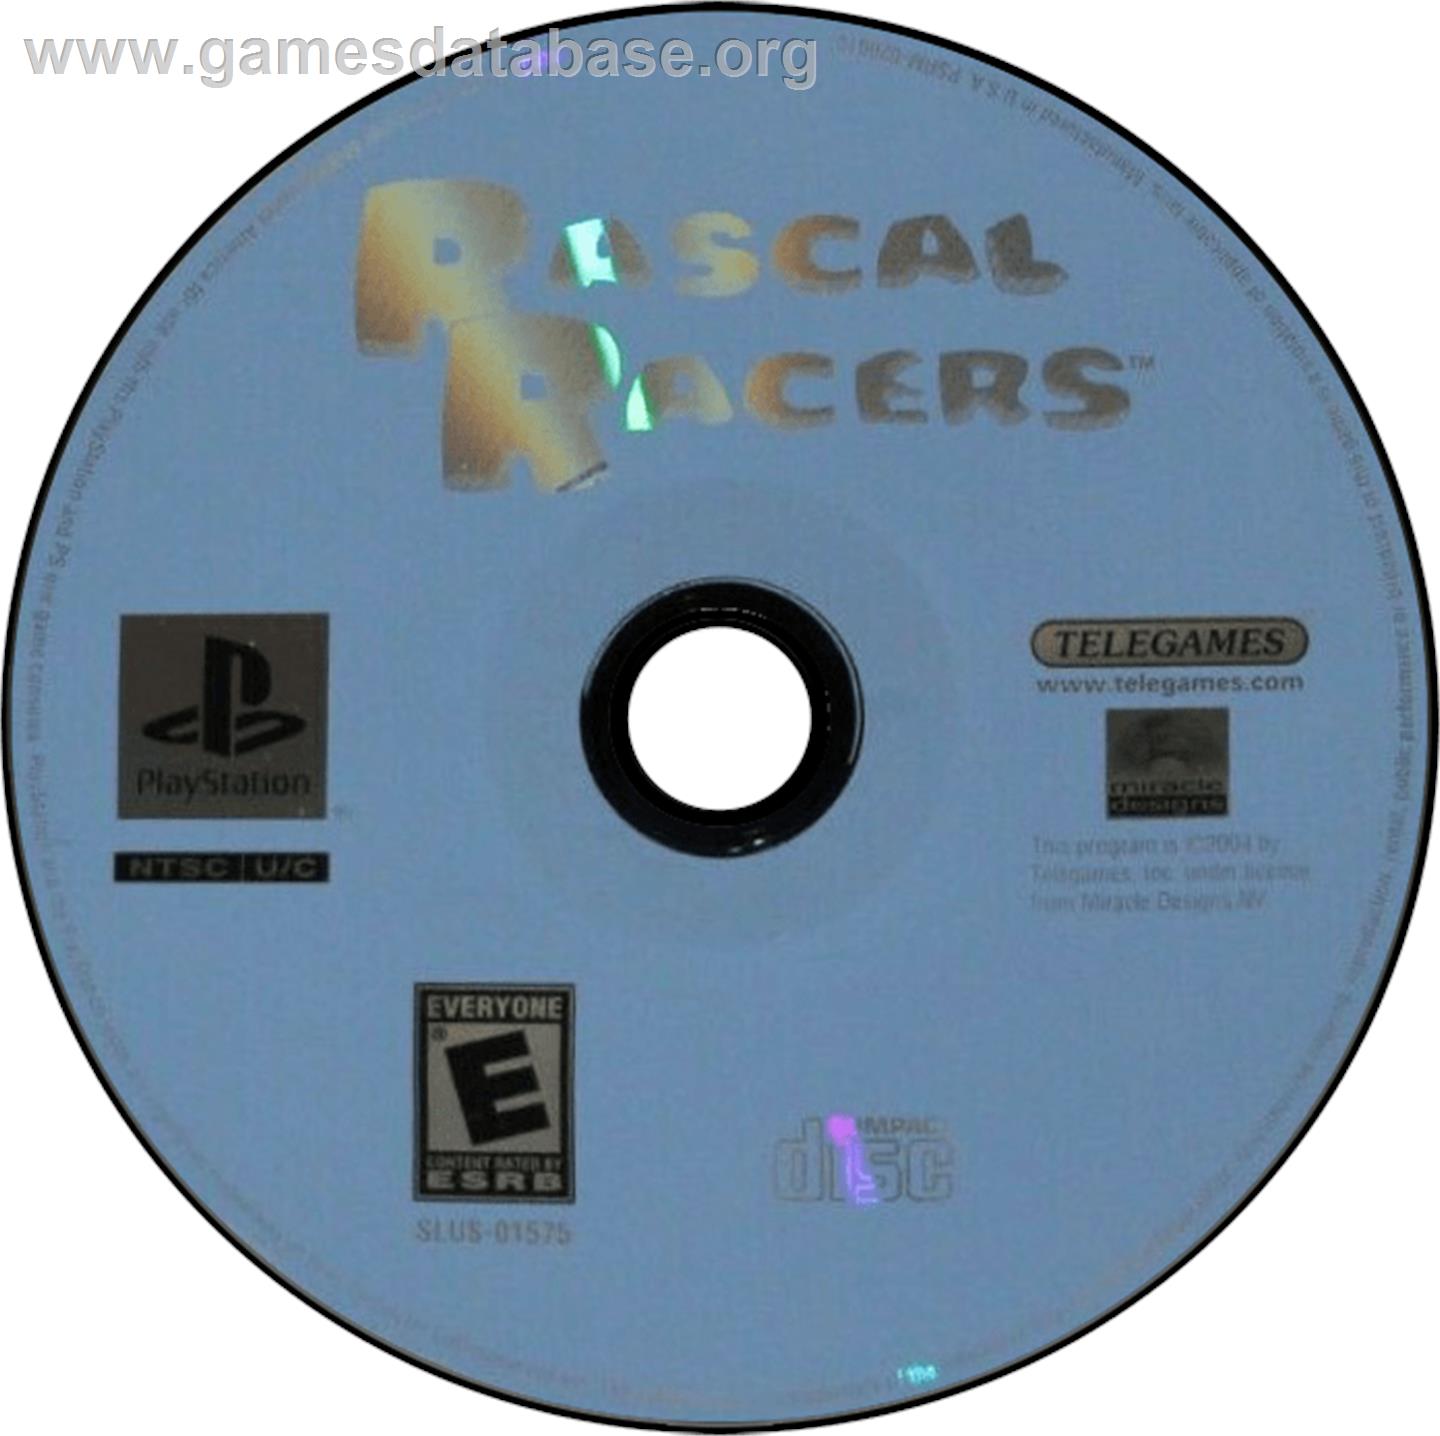 Rascal Racers - Sony Playstation - Artwork - Disc